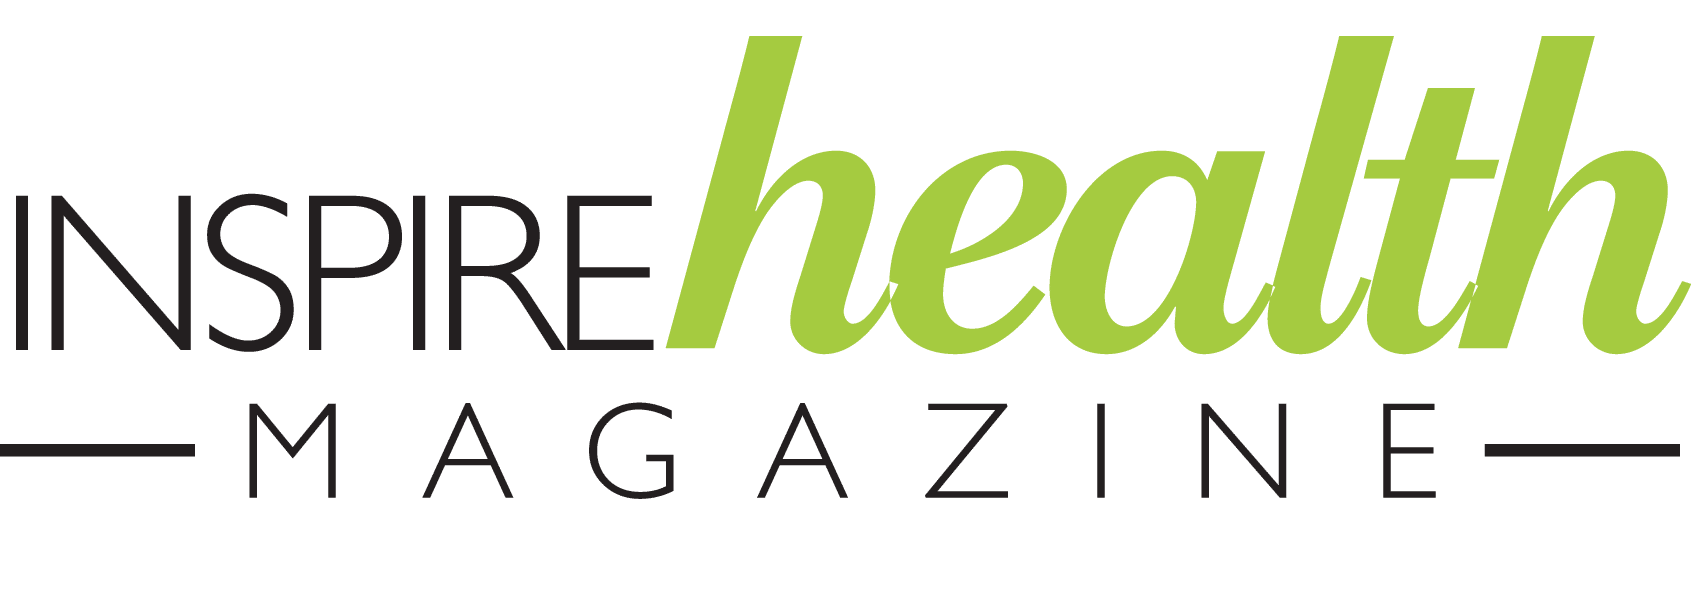 Inspire Health Magazine Logo _ Ready to publish pre-designed magazine templates